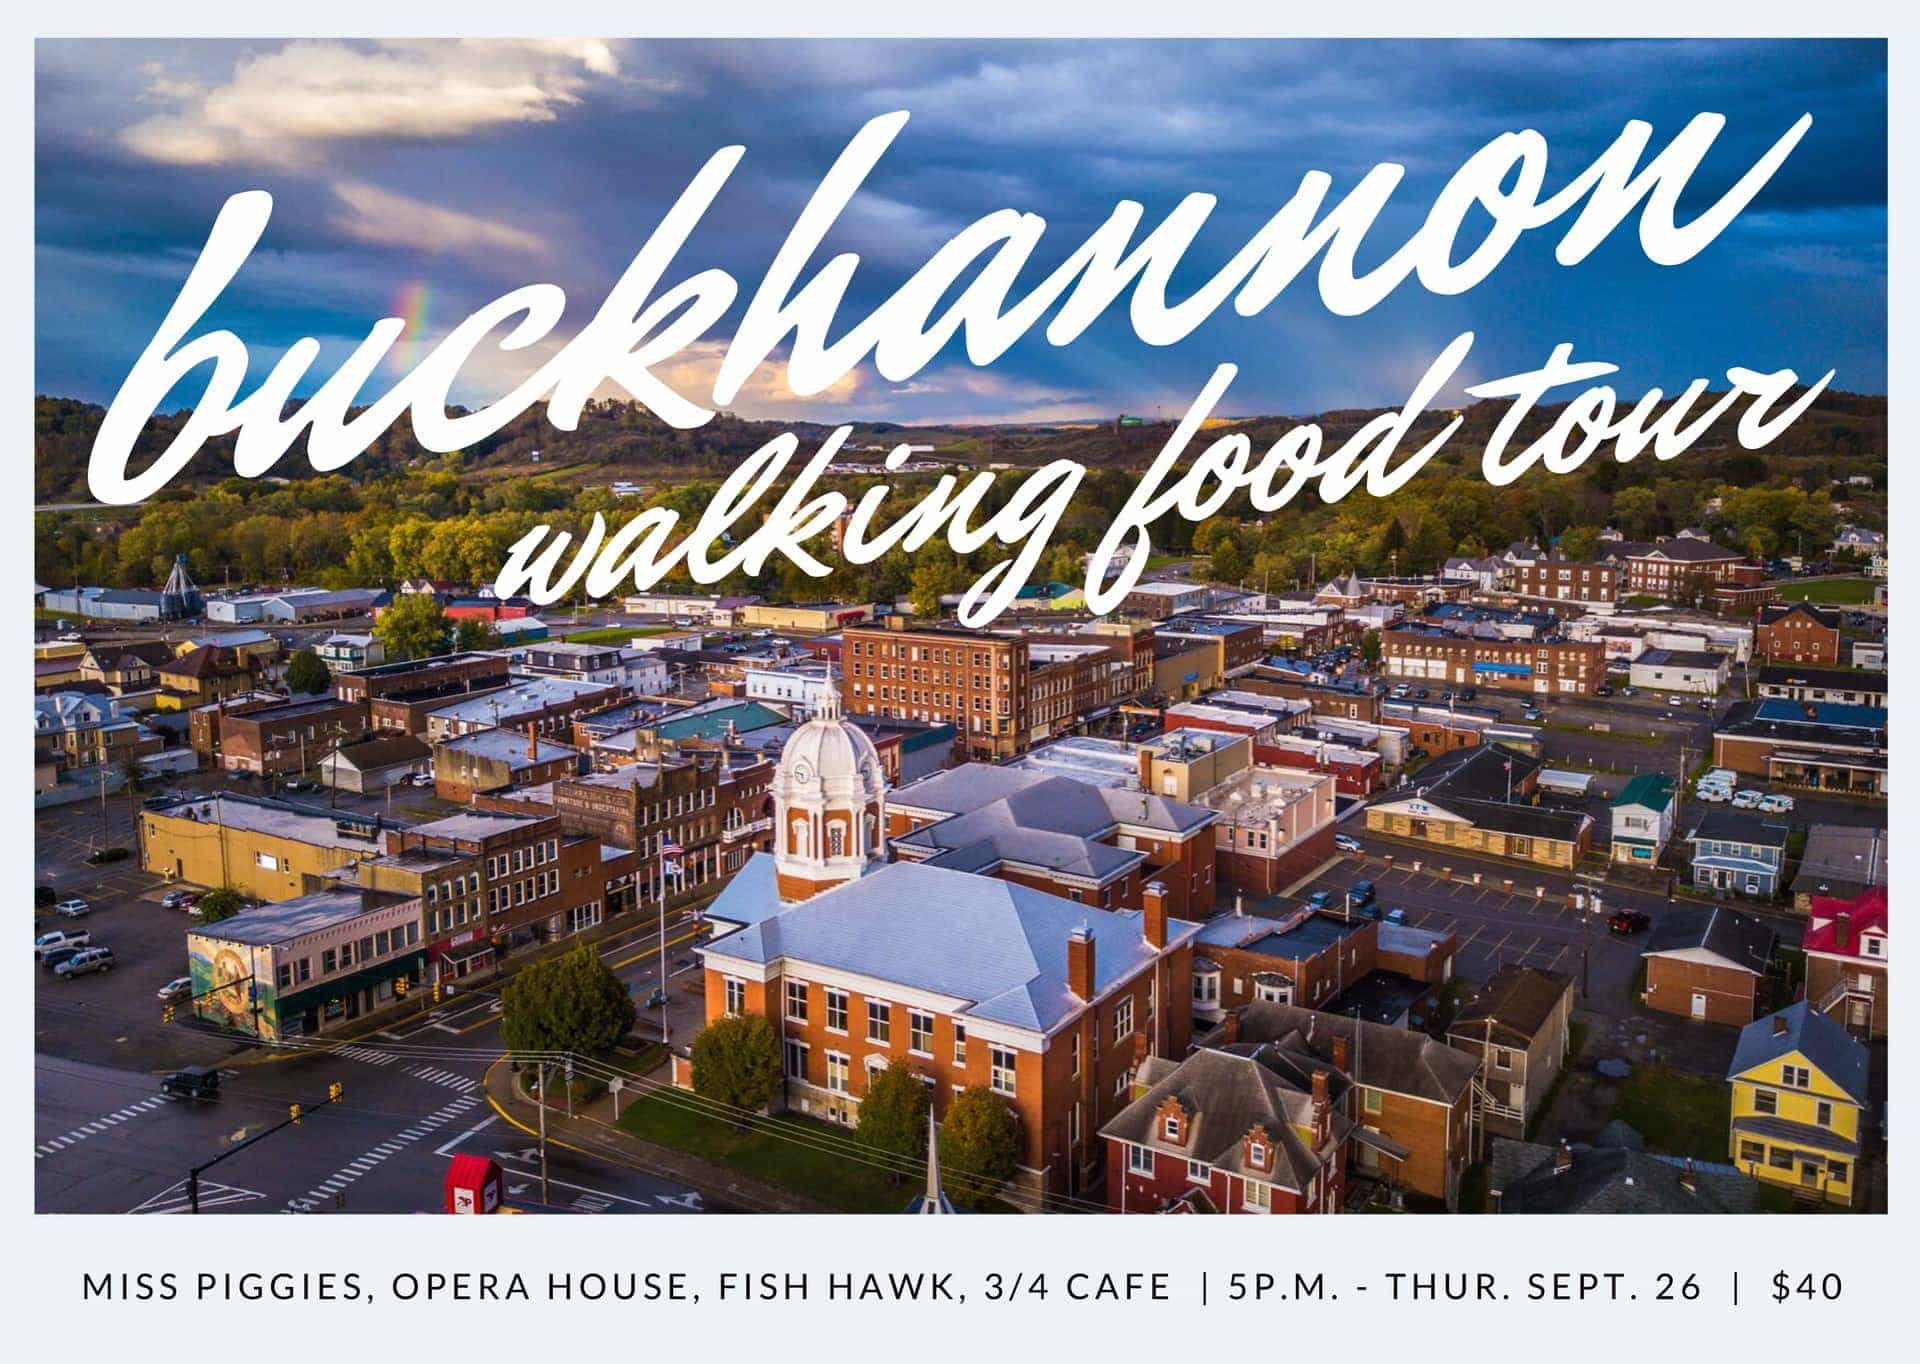 Buckhannon Walking food tour